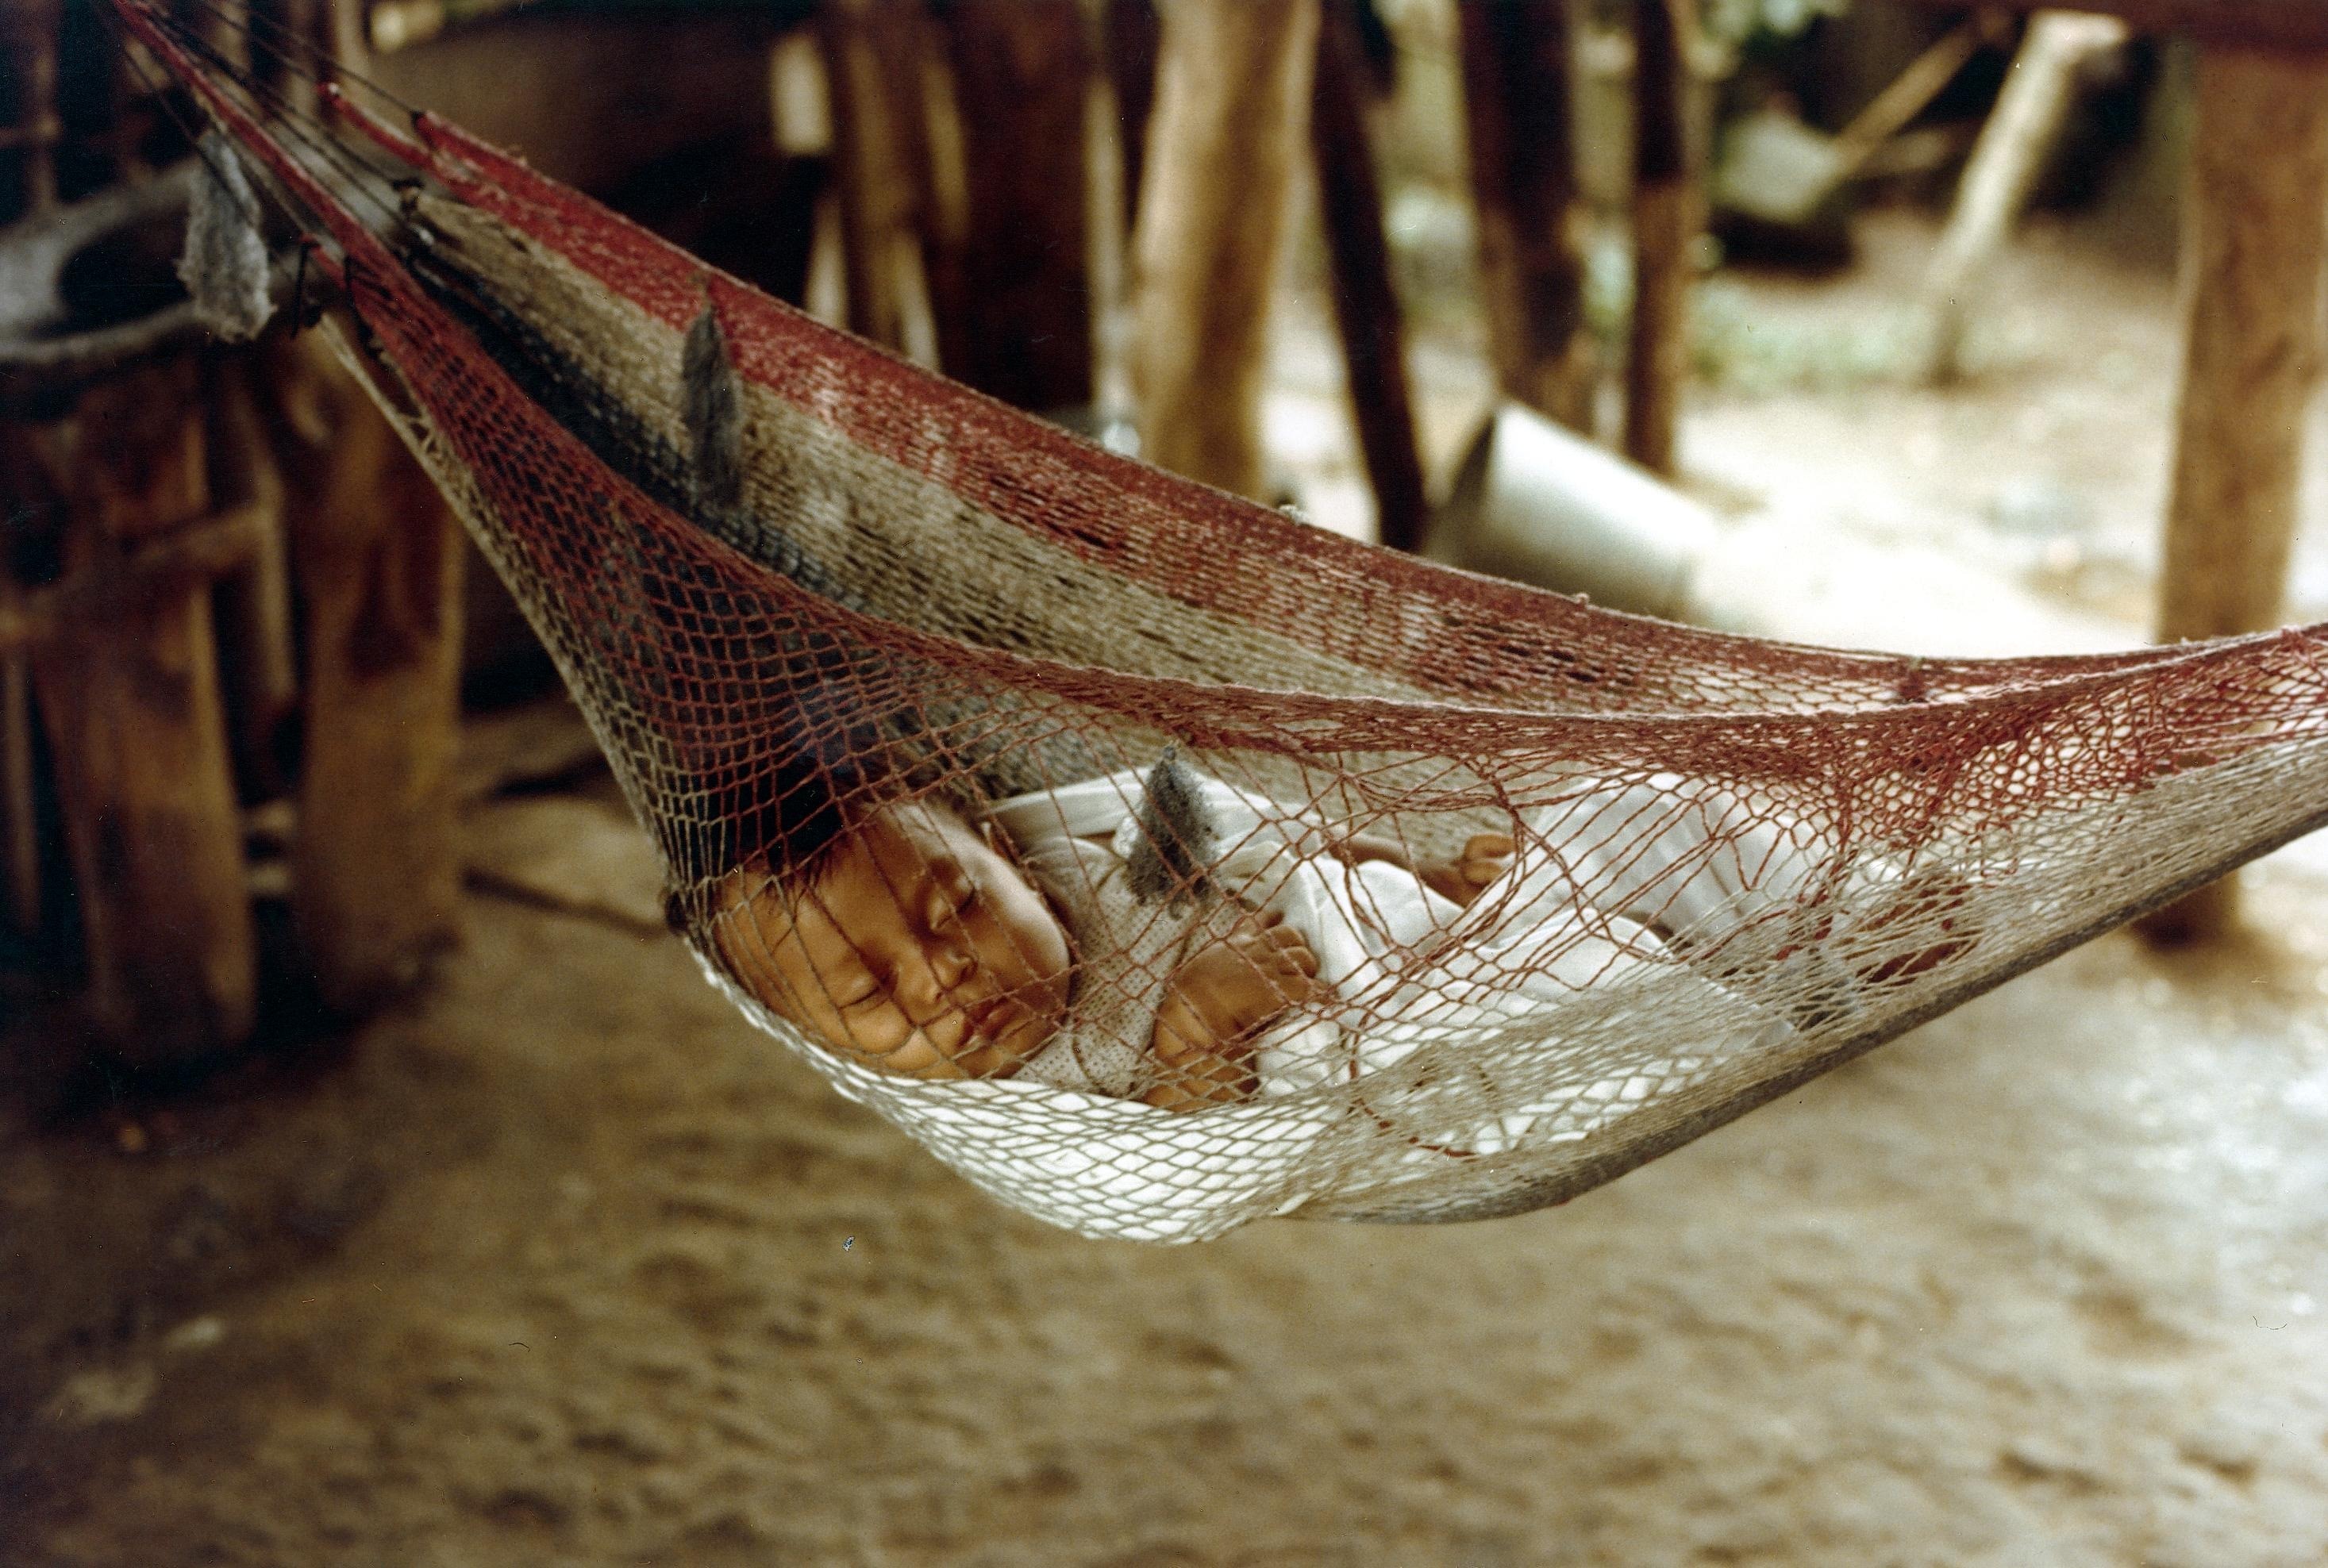 Cute, Honduras, Sleeping, Baby, Inside, one animal, animal themes